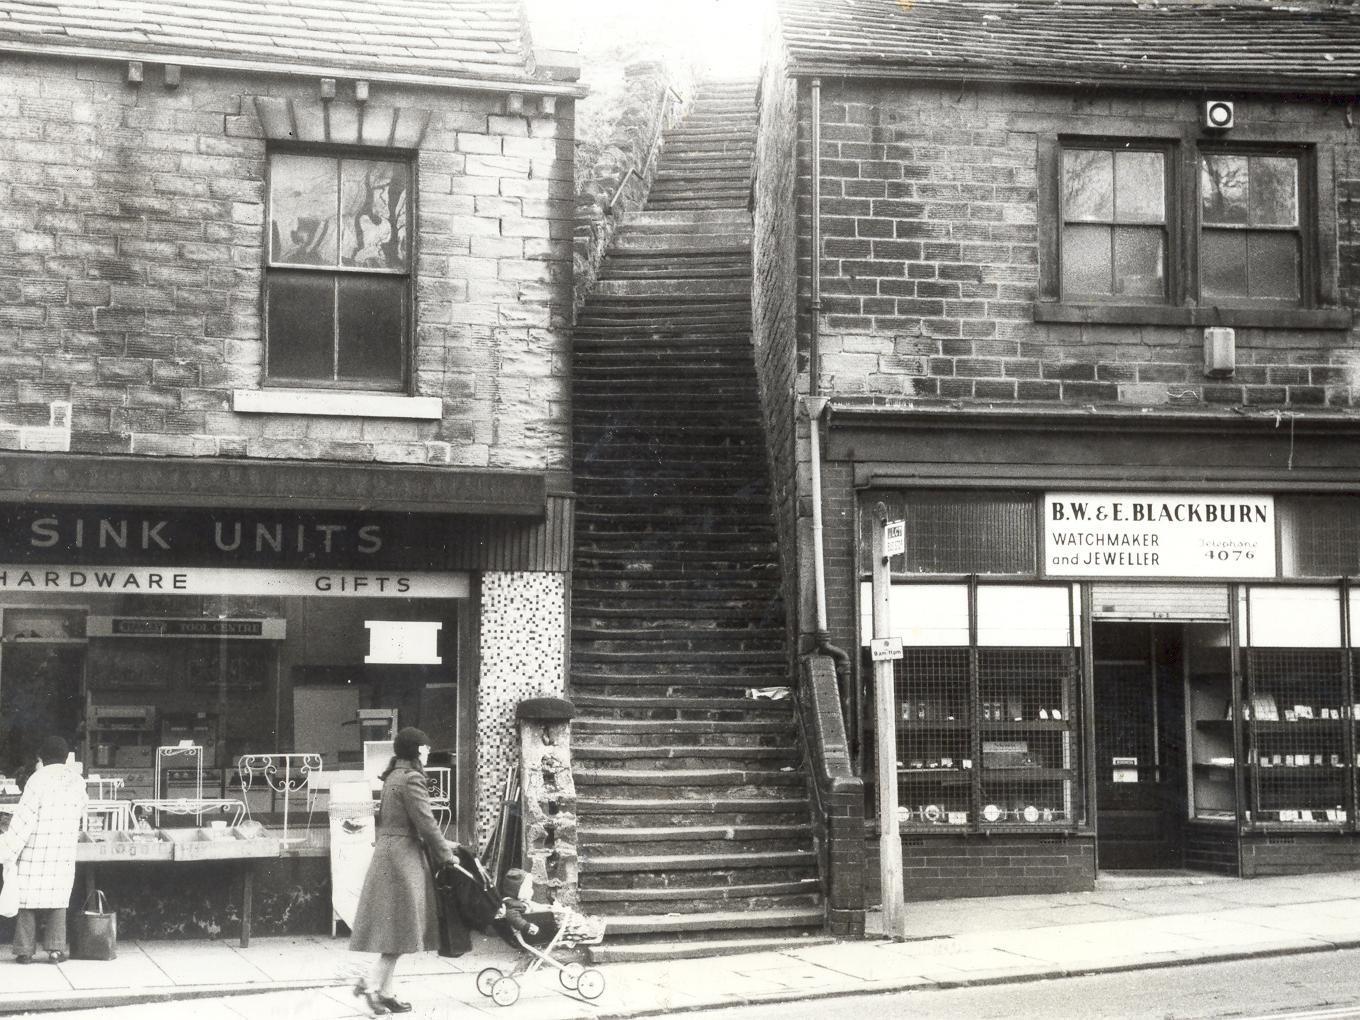 An old-world corner of Morley Bottoms.